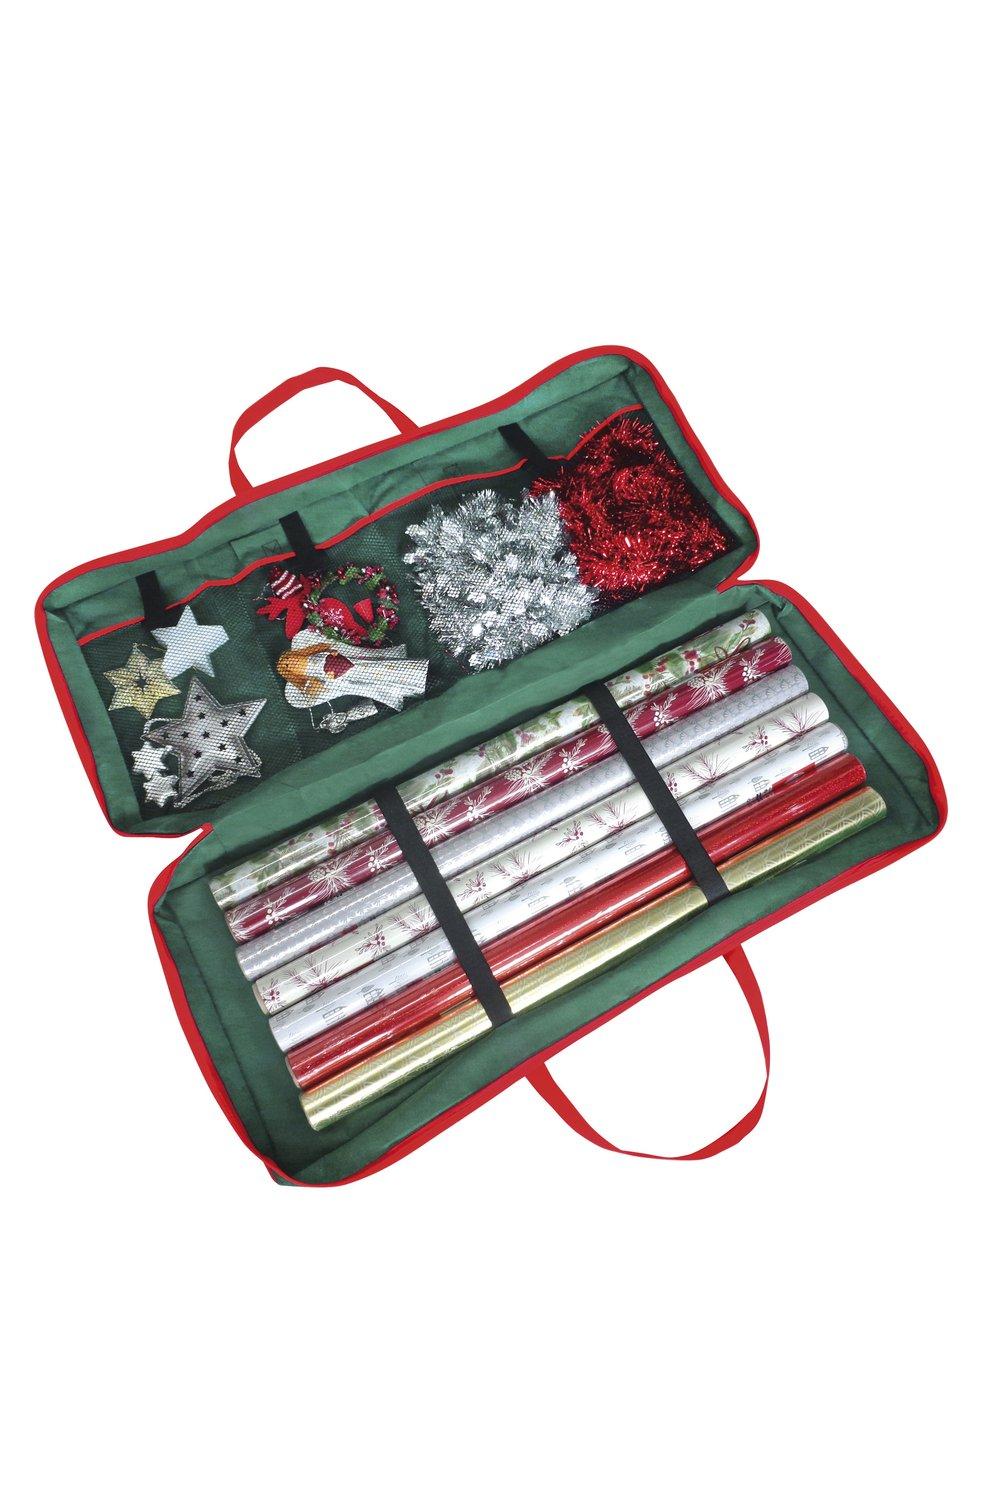 Country Club Christmas Corner Gift Wrap Storage Bag 82 x 34 x 13cm|dark green